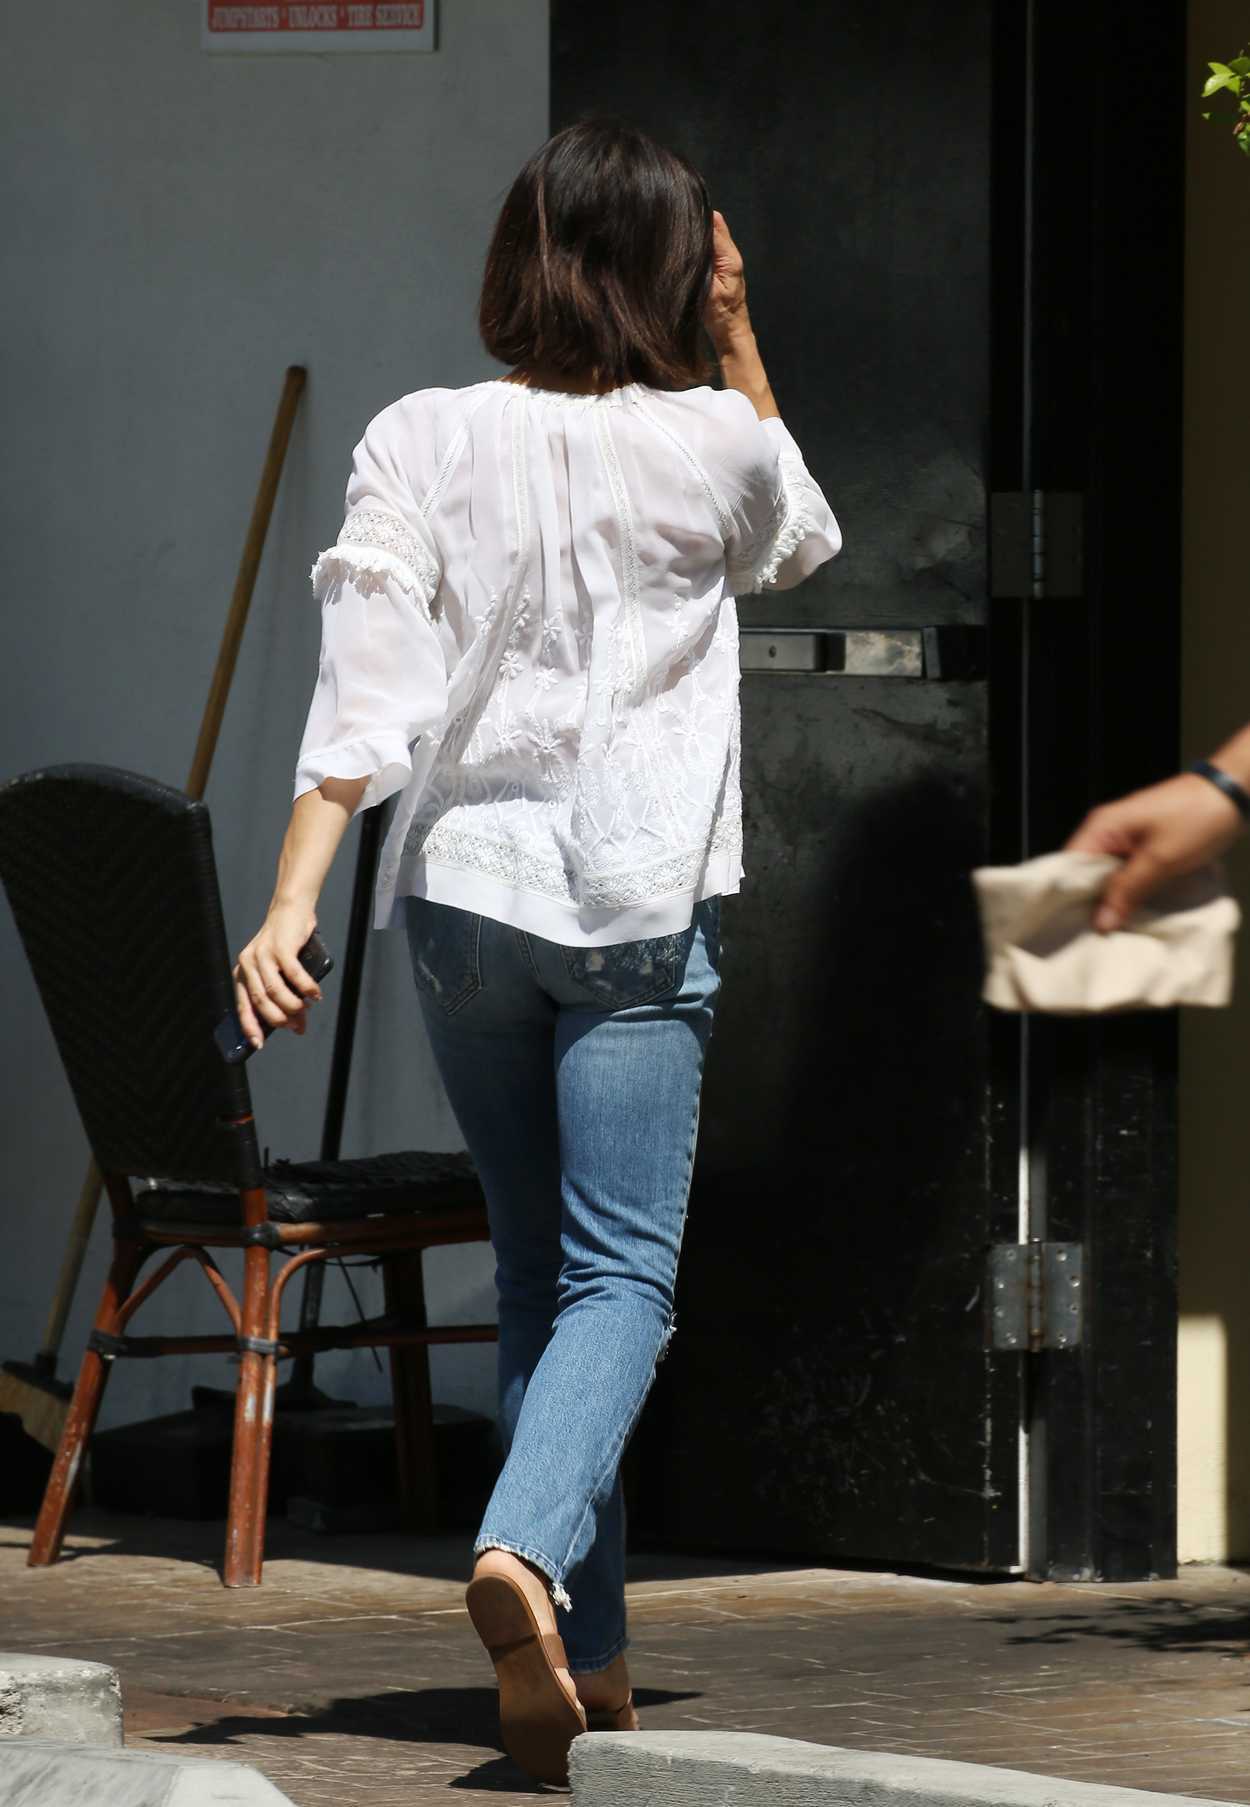 Jenna Dewan in a White Lace Blouse